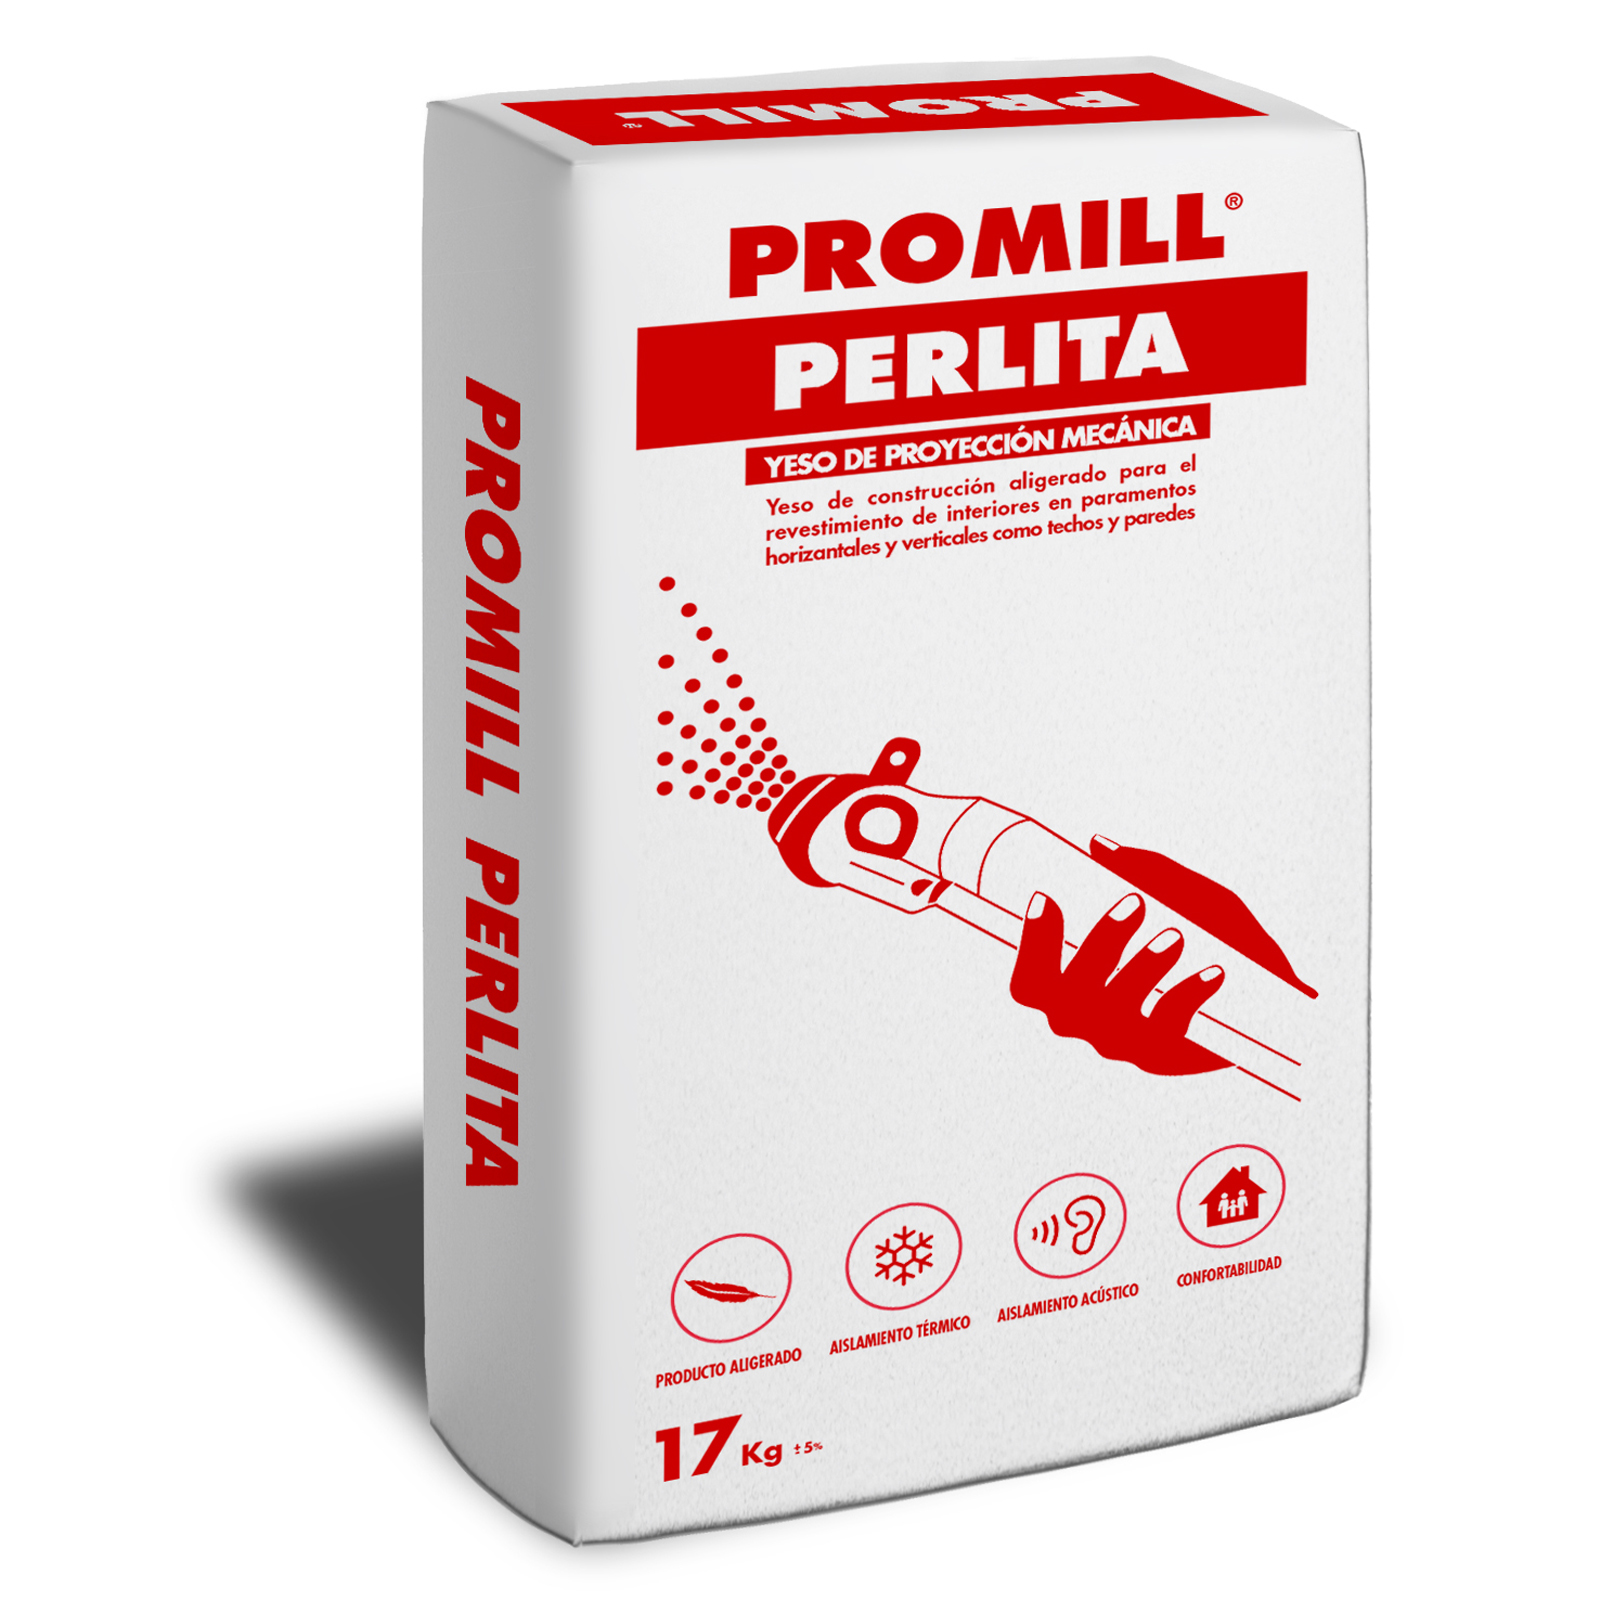 PROMILL PERLITA